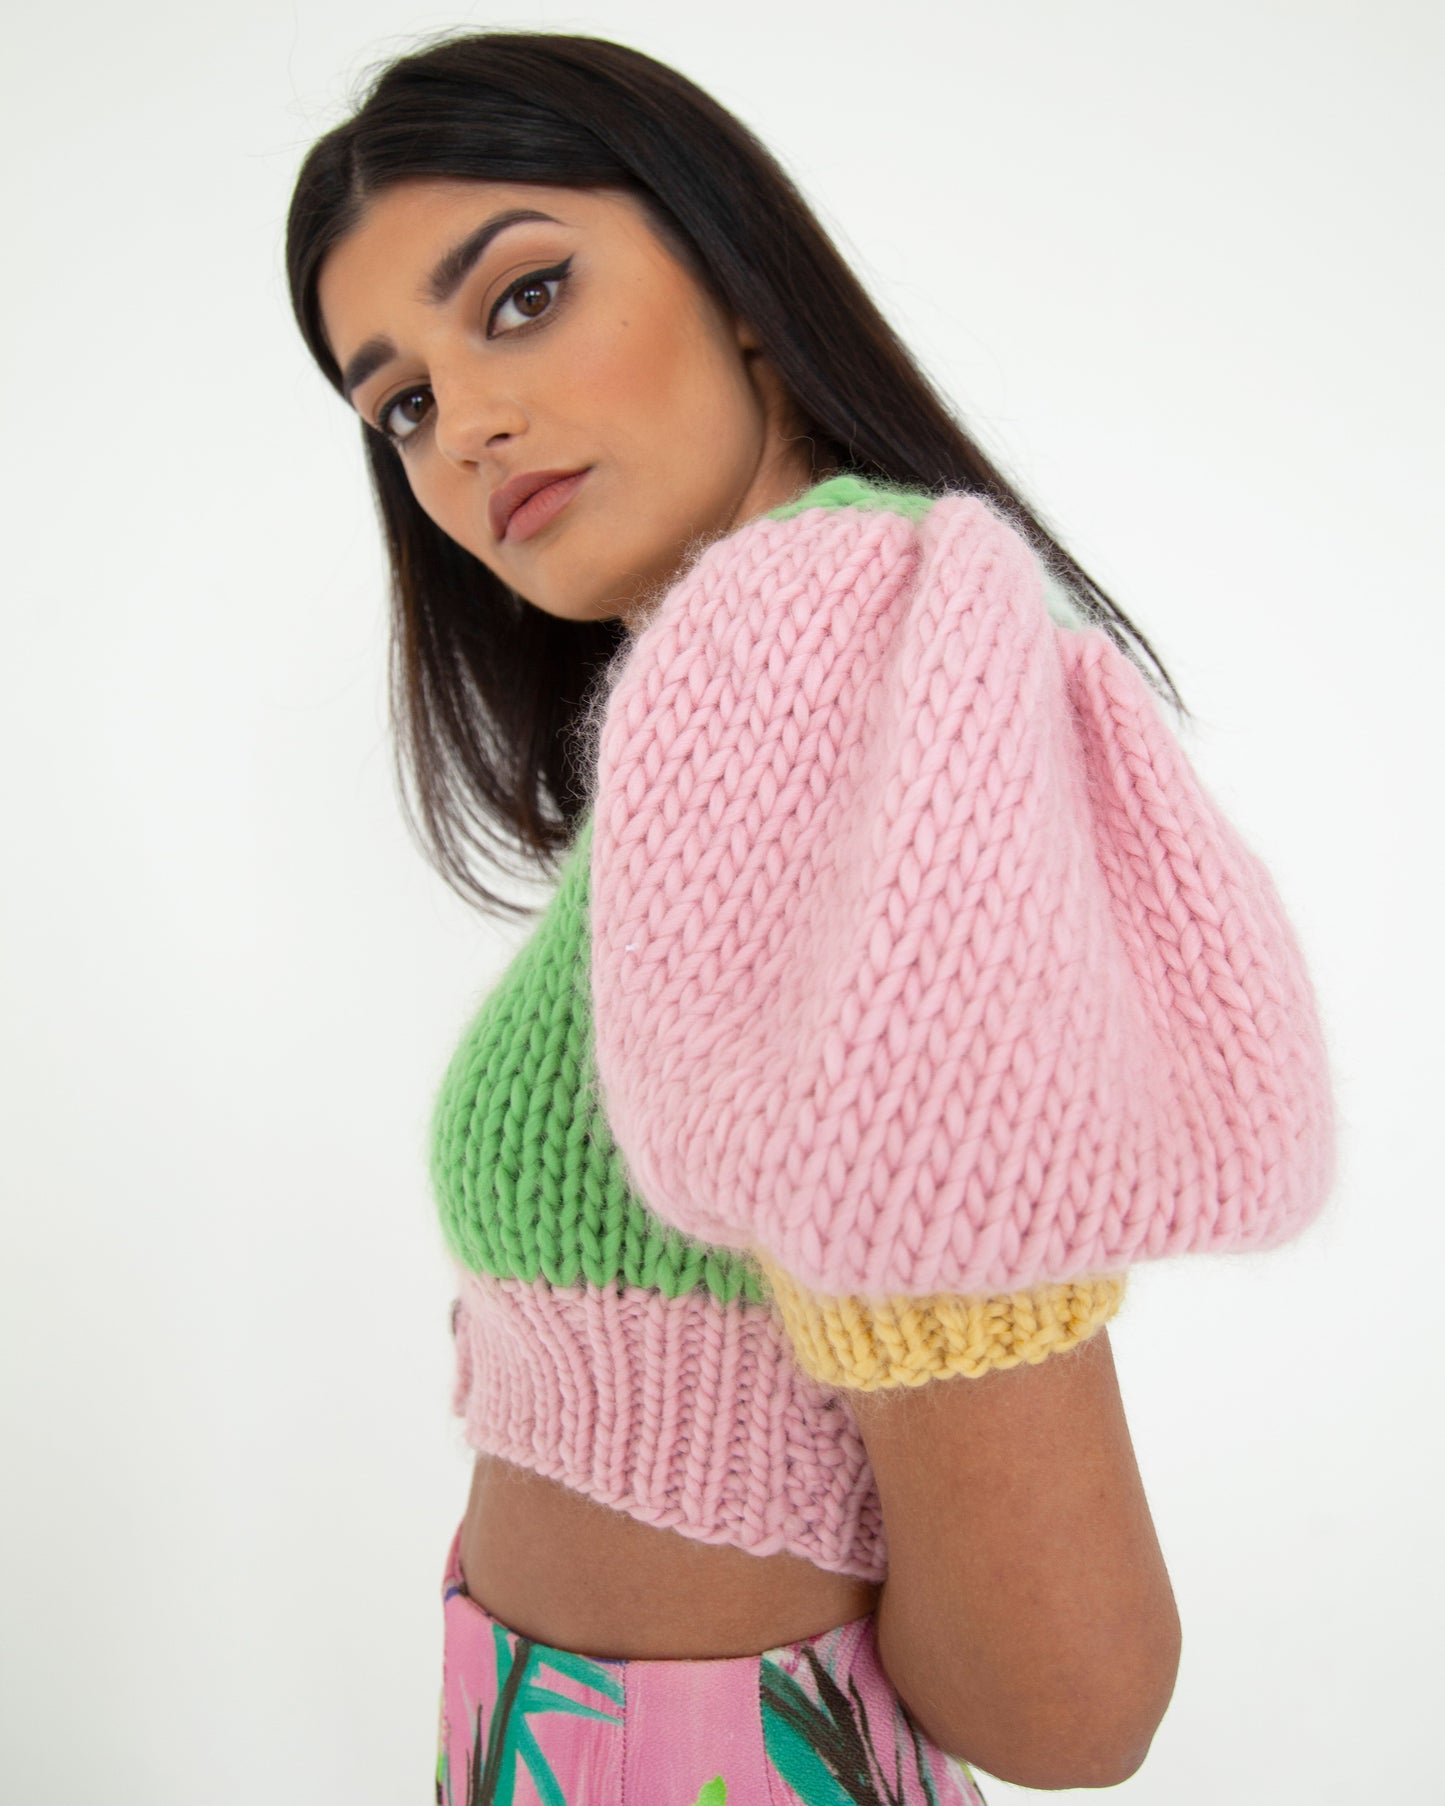 Hope Macaulay Sparkle Puff Sleeve Chunky Knit Top Knitting Kit